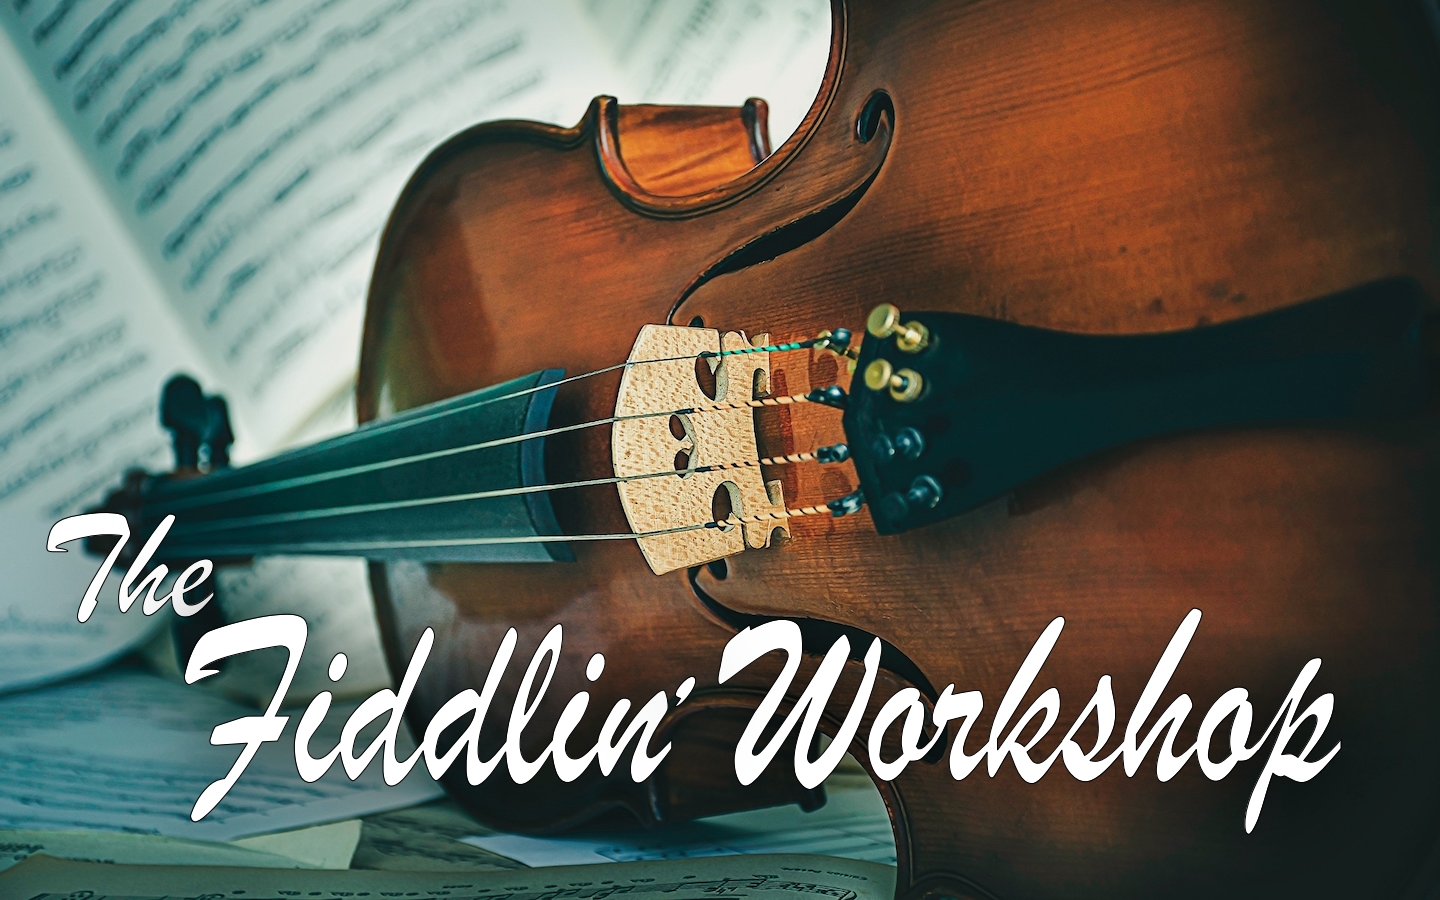 The Fiddlin' Workshop